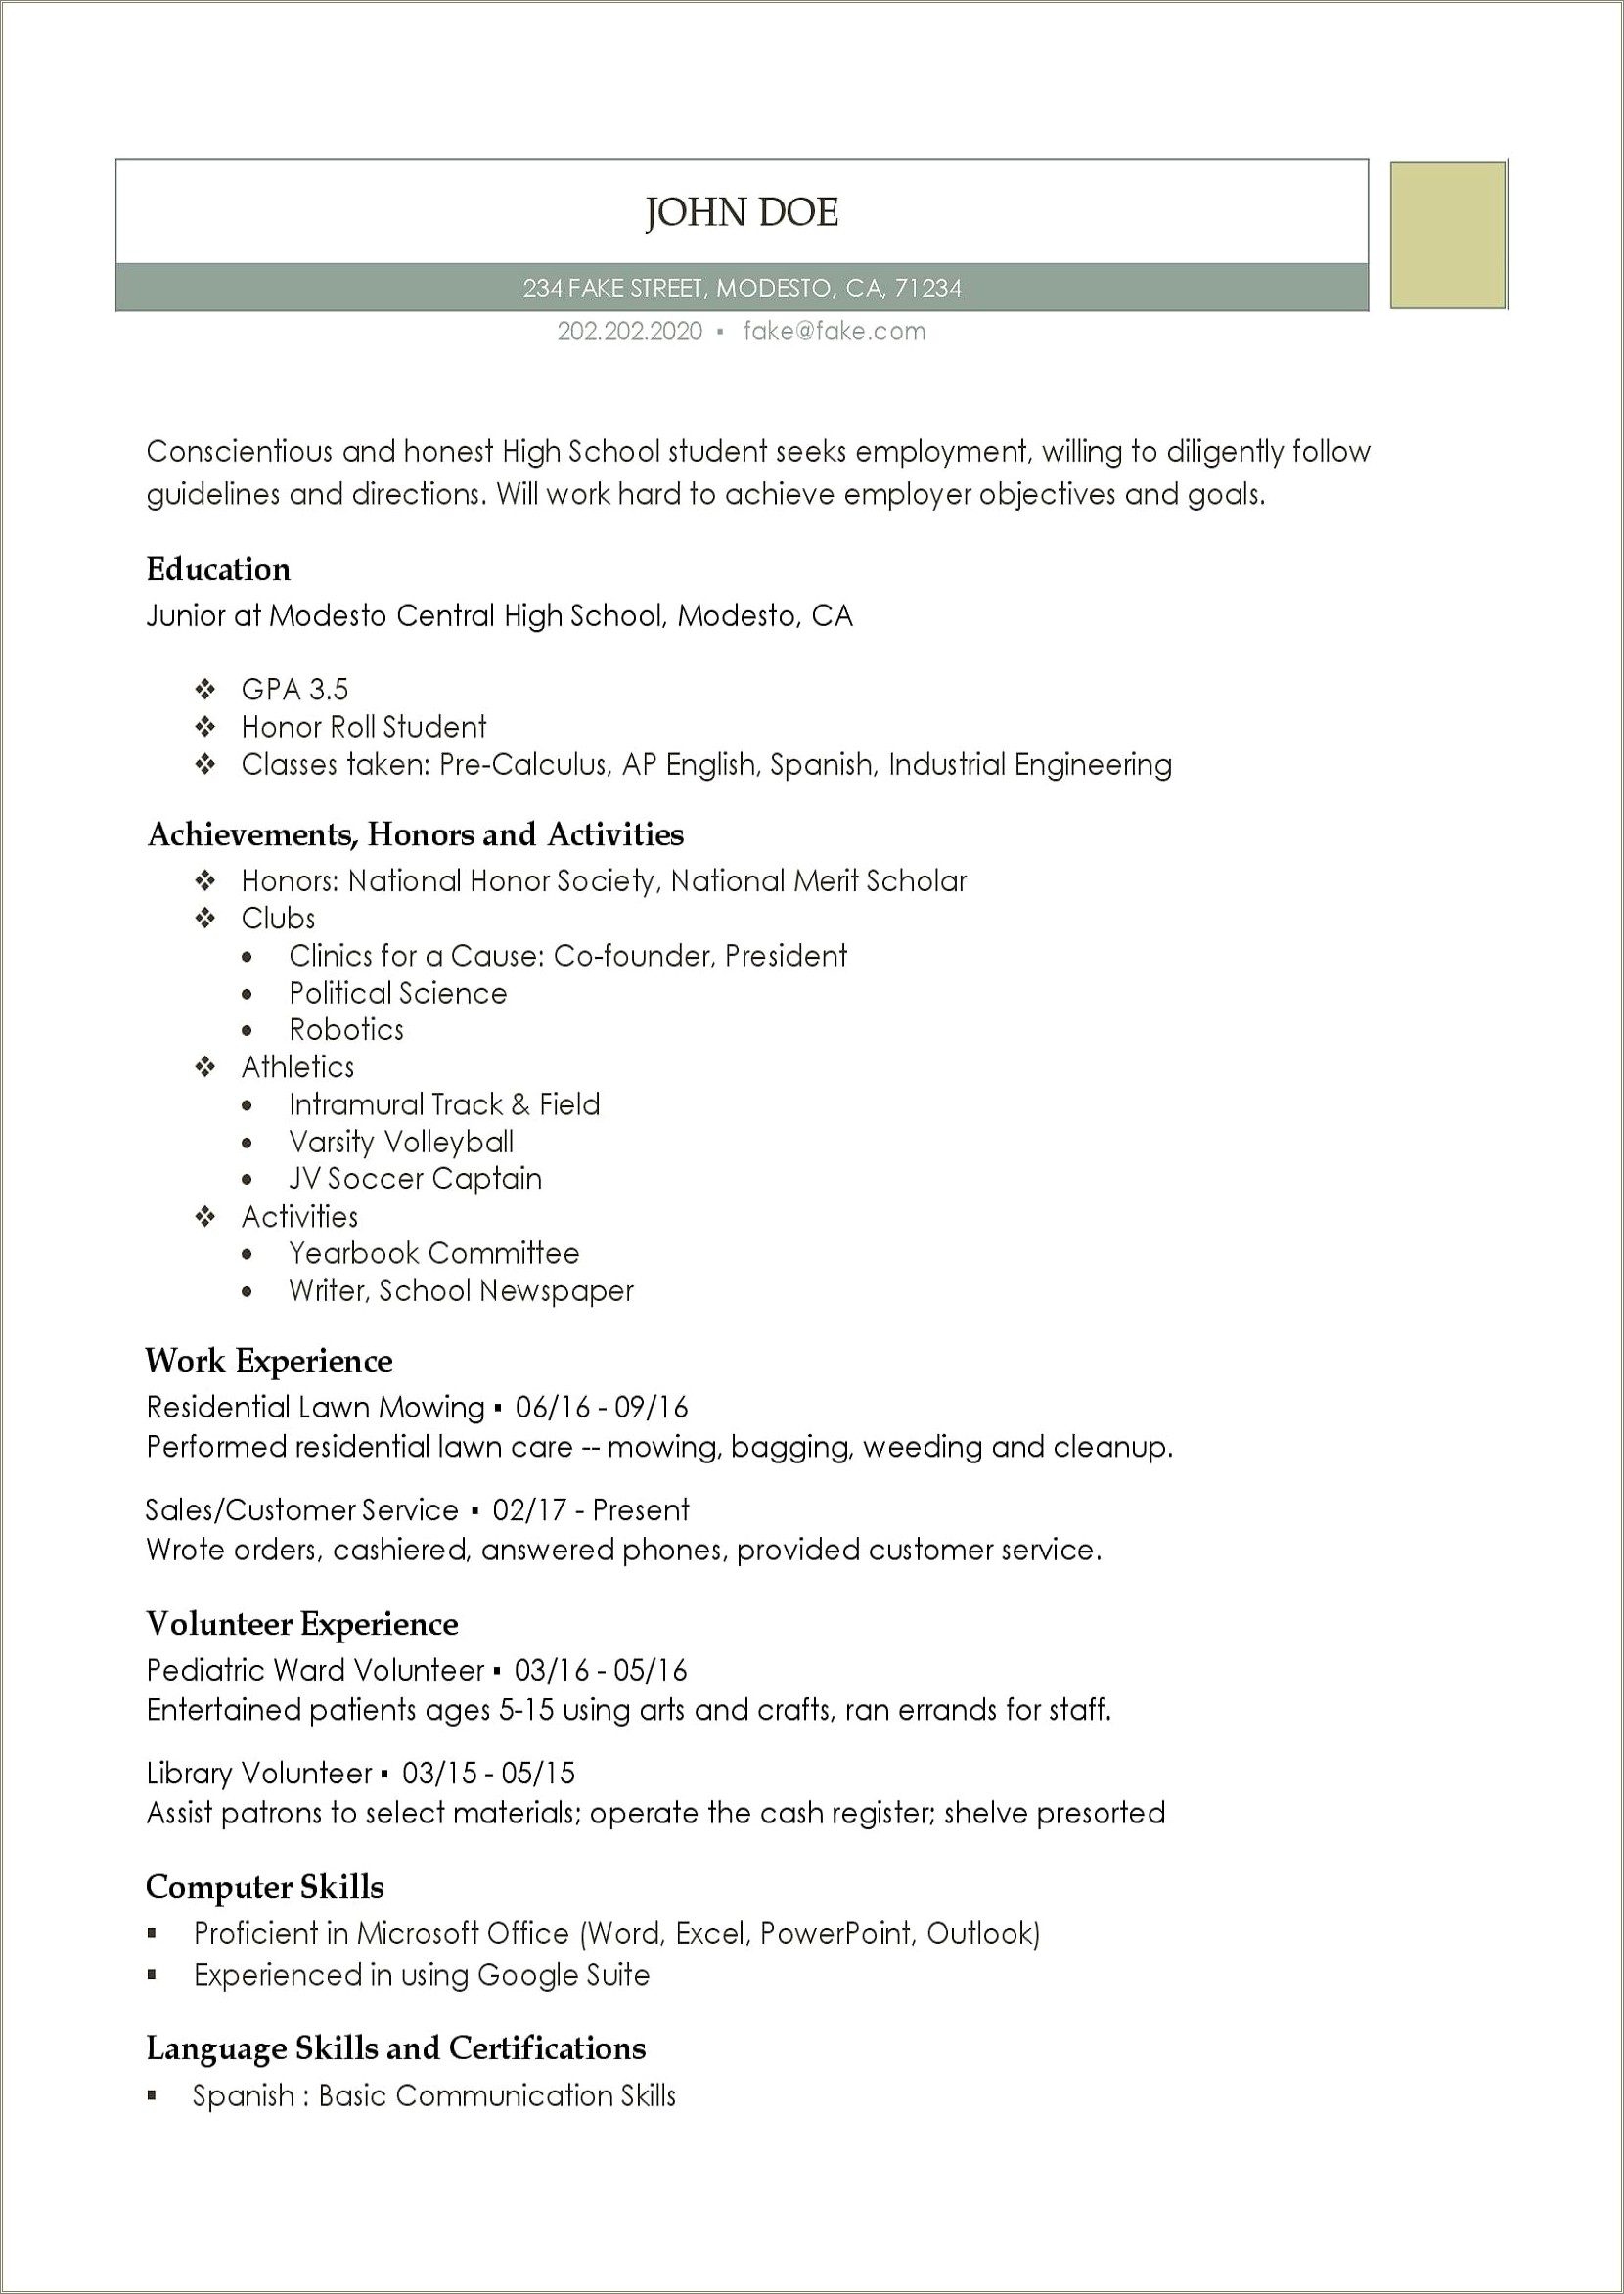 Sample School Resume For High School